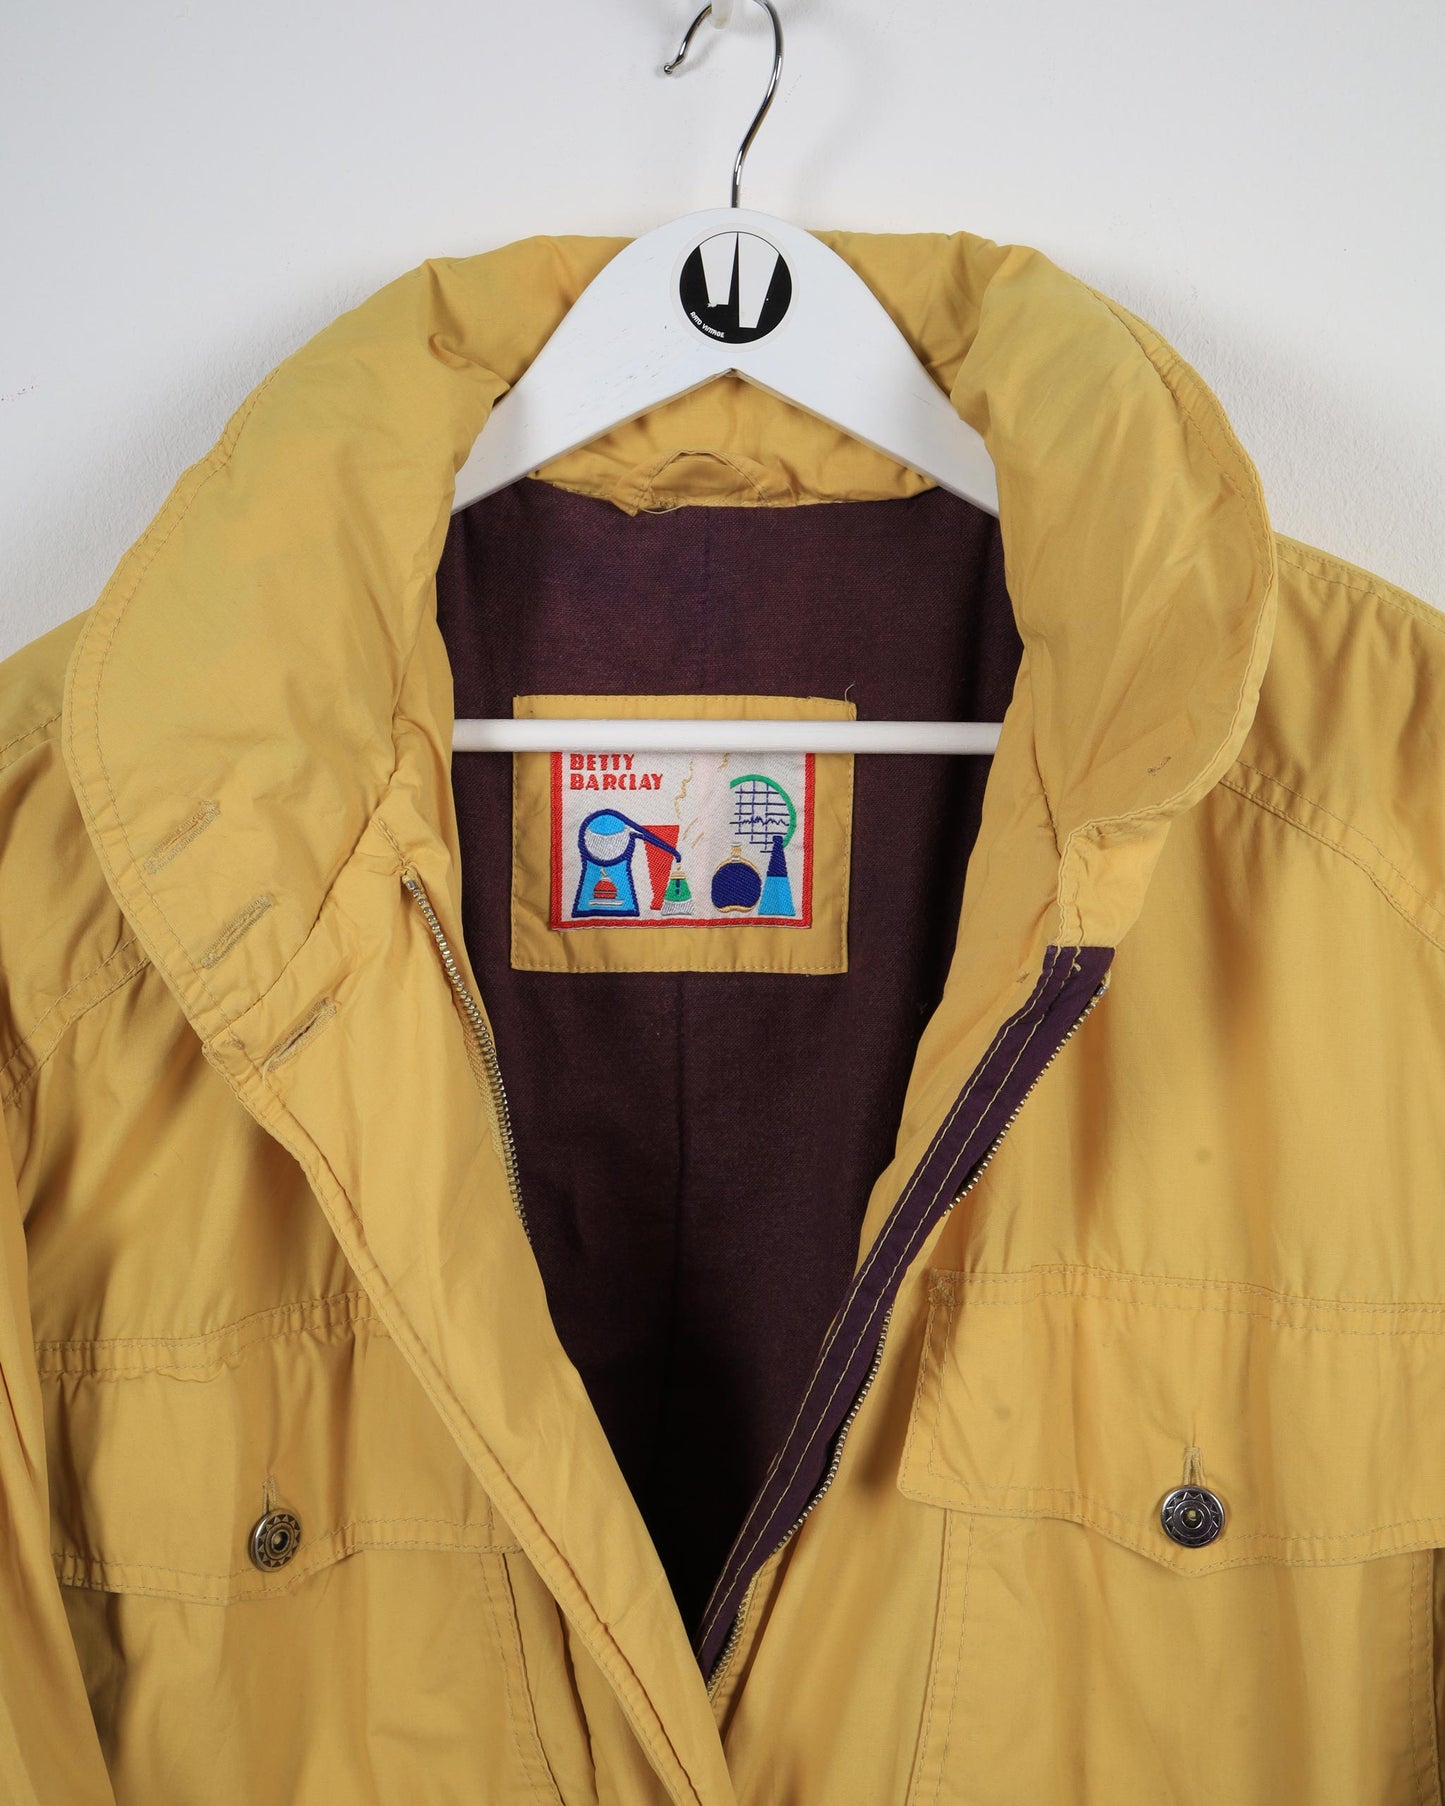 W’ Vintage Betty Barclay Parka Jacket